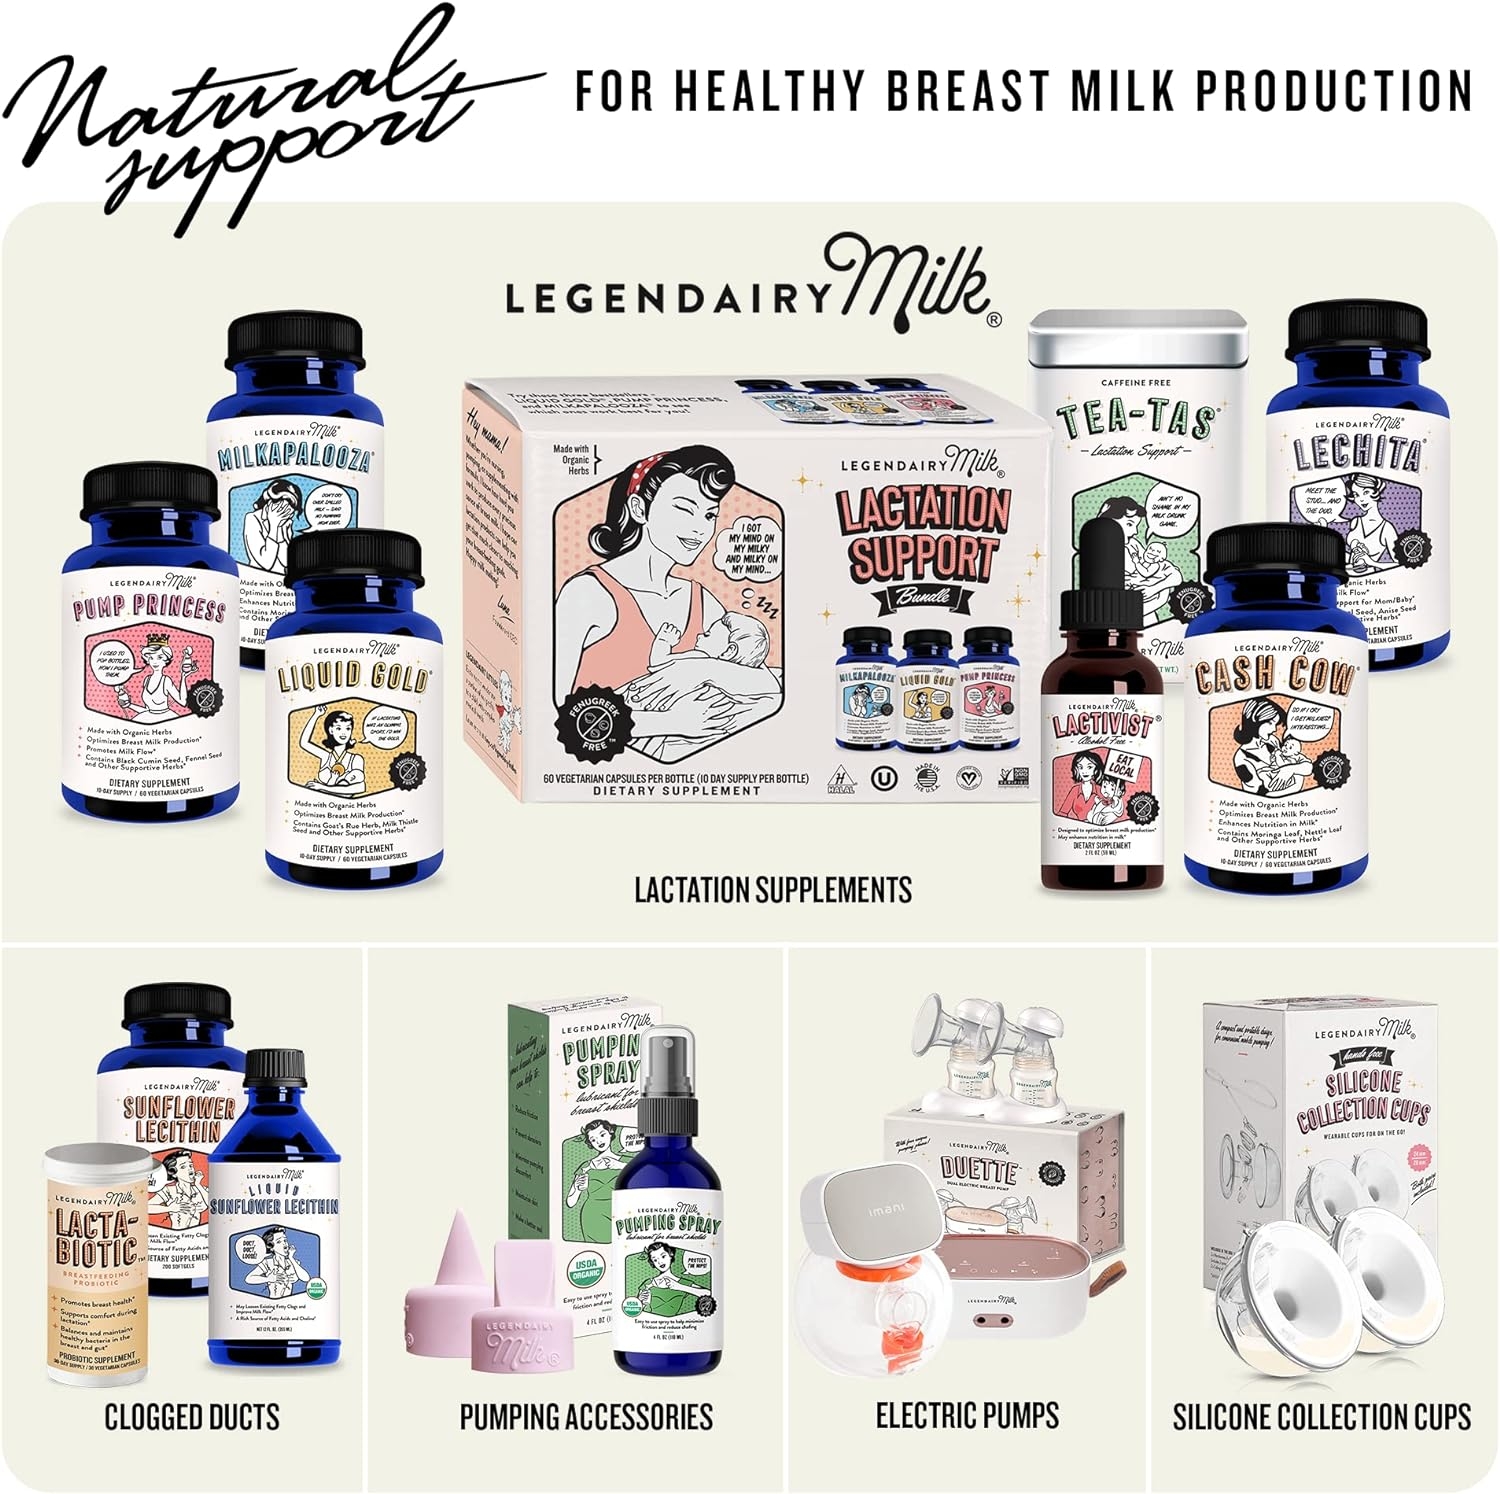 Legendairy Milk® Liquid Gold® - Herbal Breastfeeding Supplement to Increase Milk Supply - Contains Goats Rue and Milk Thistle